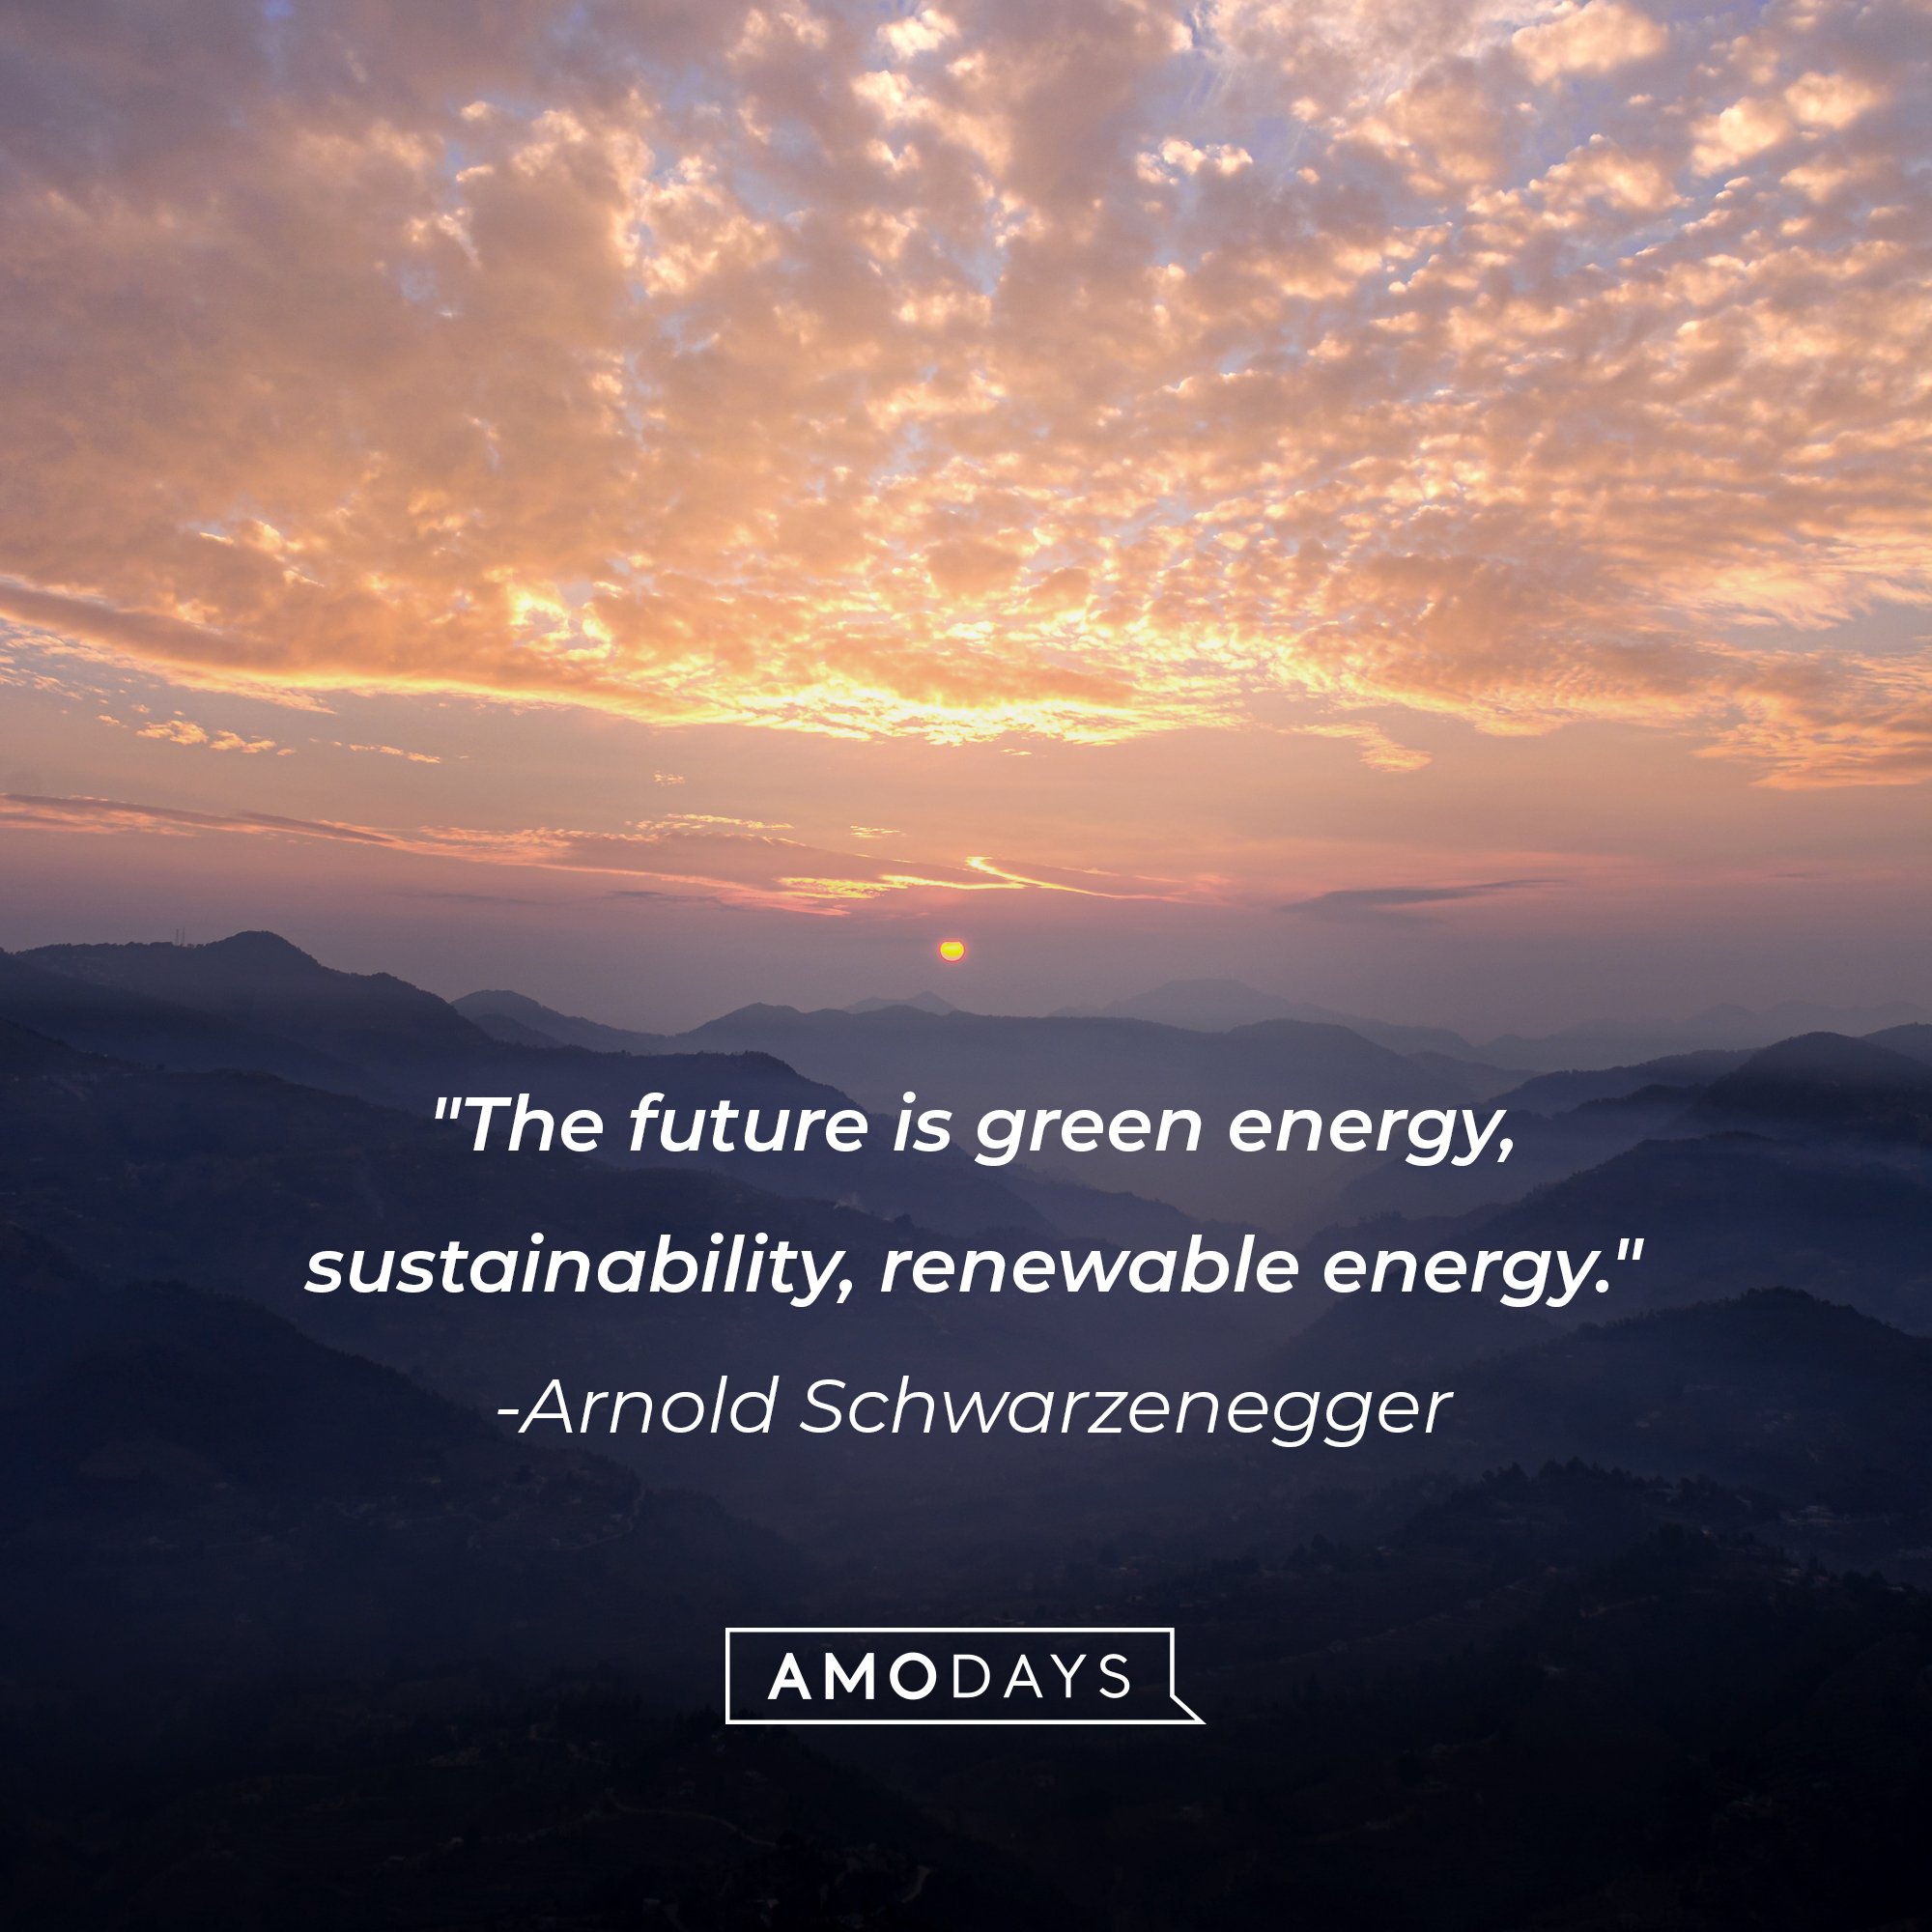 Arnold Schwarzenegger’s quote: "The future is green energy, sustainability, renewable energy." | Image: AmoDays   